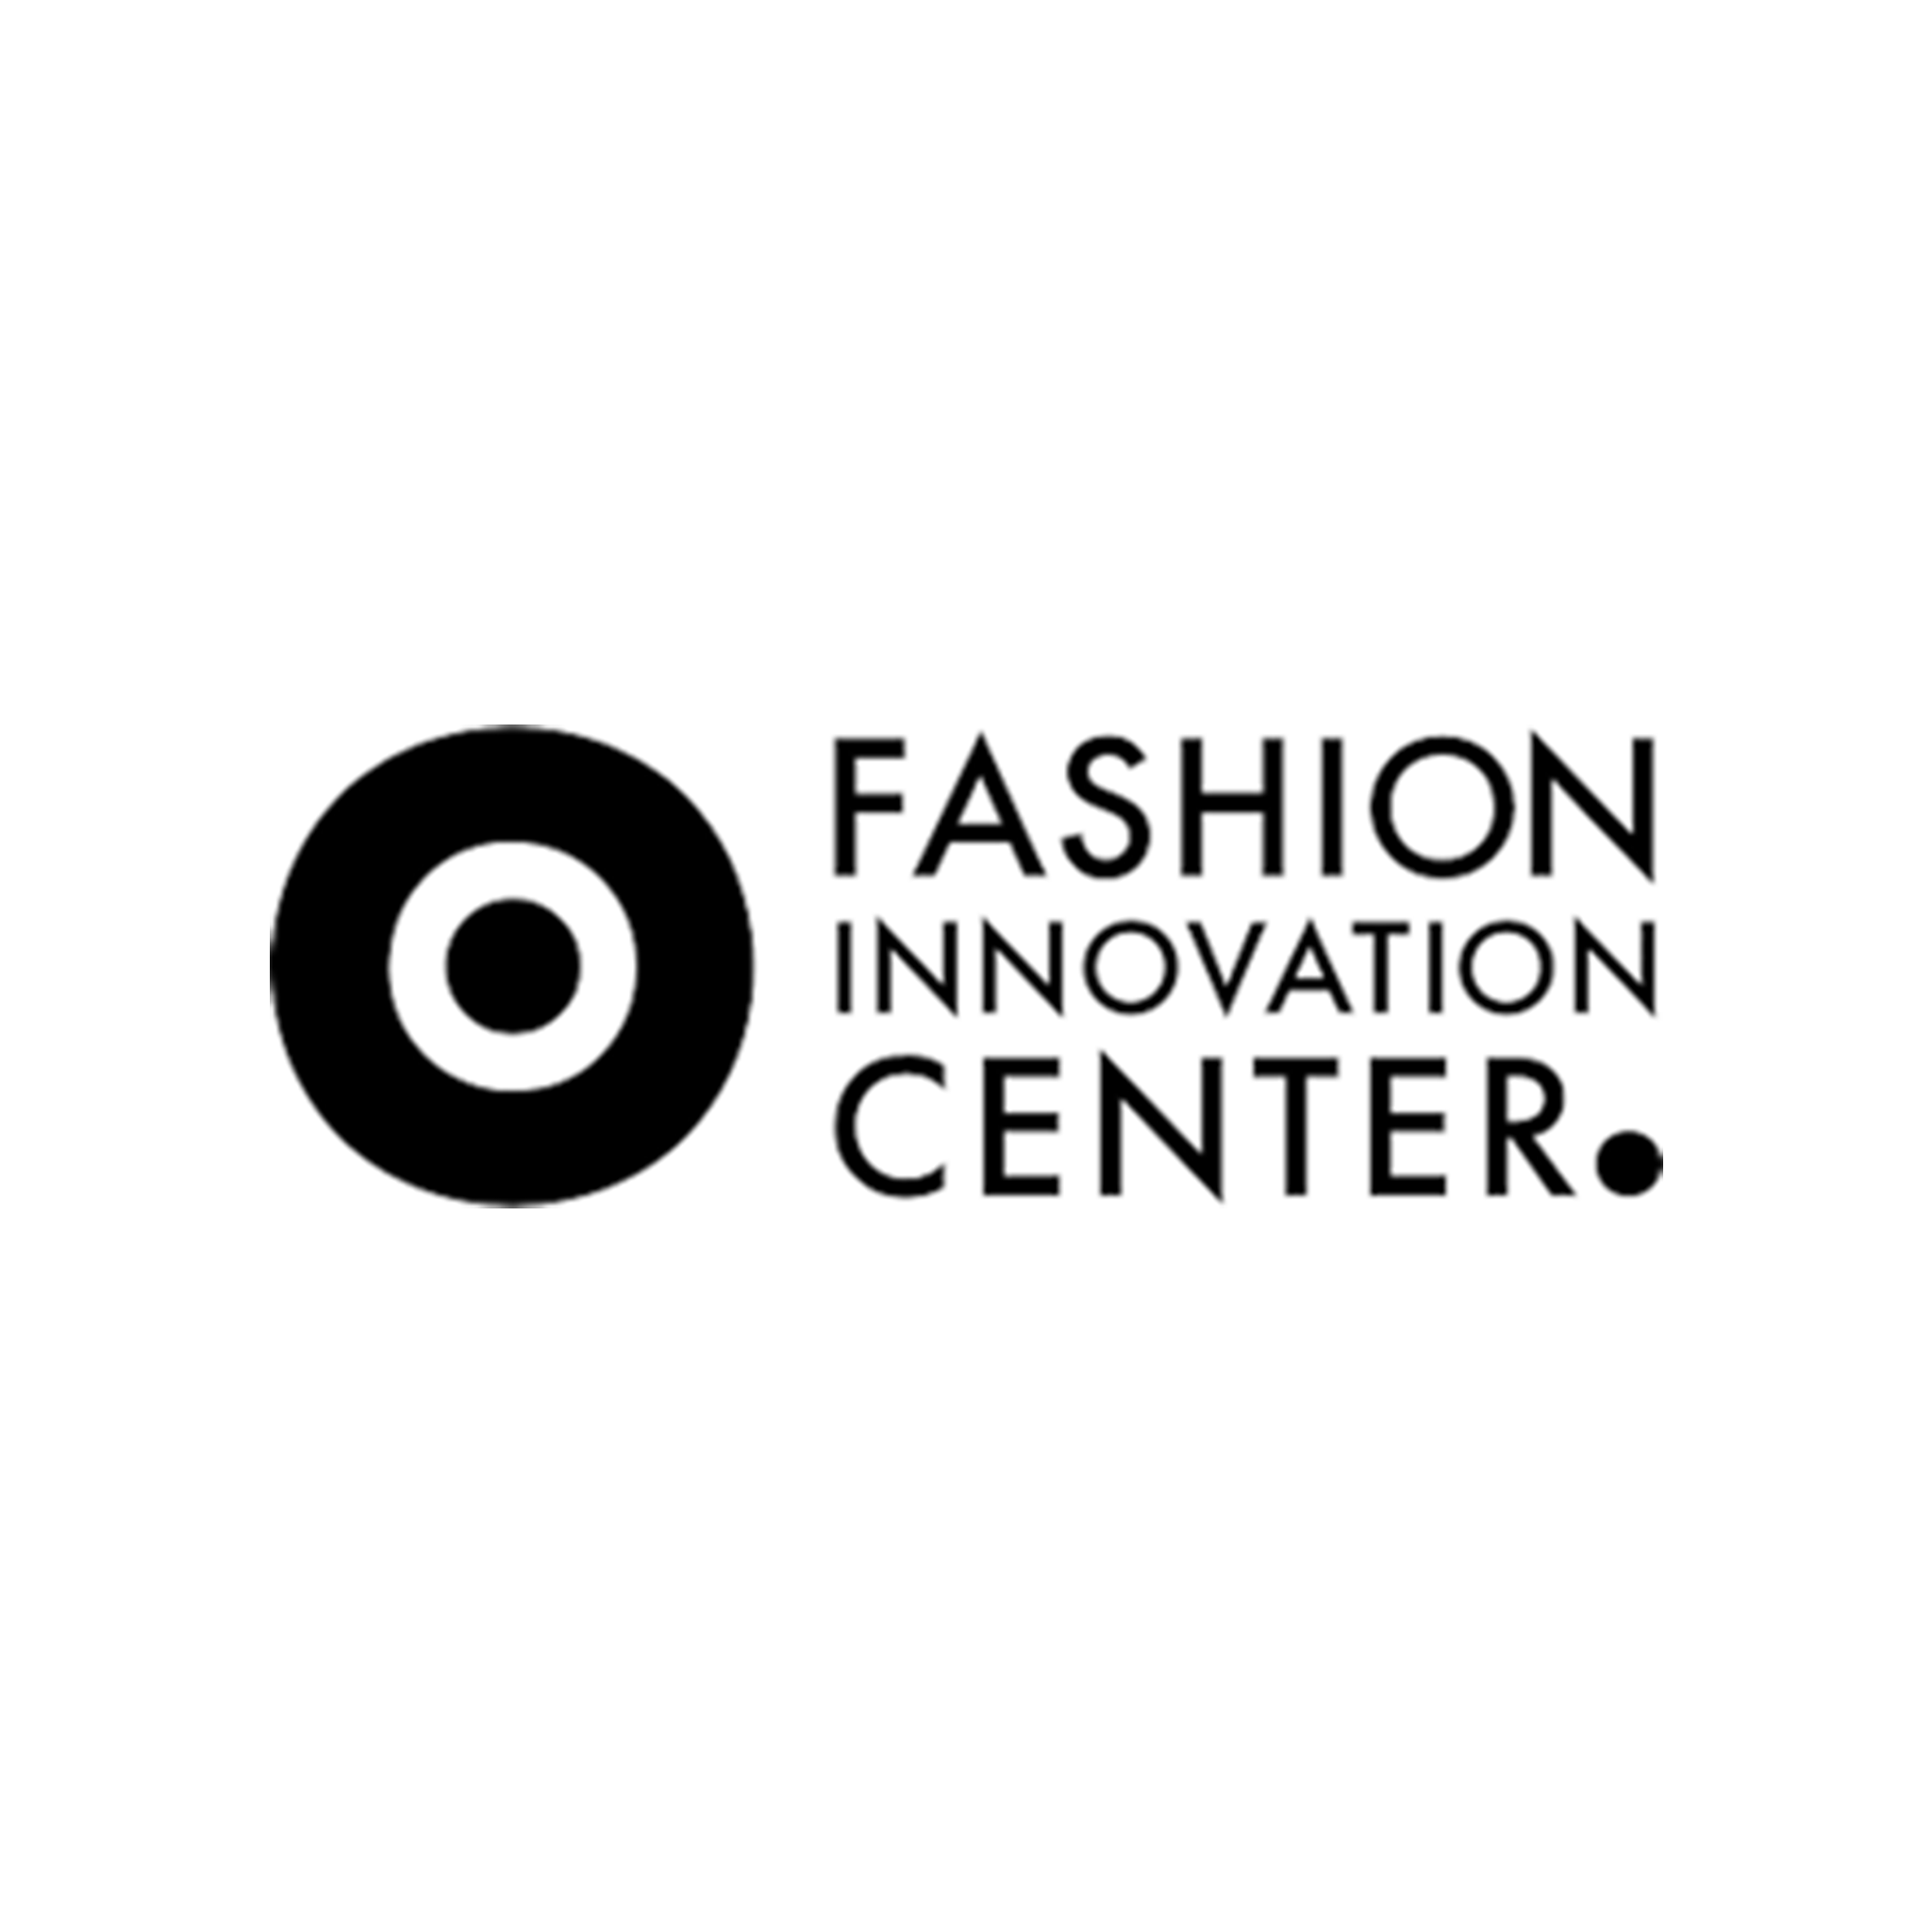 Fashion innovation center